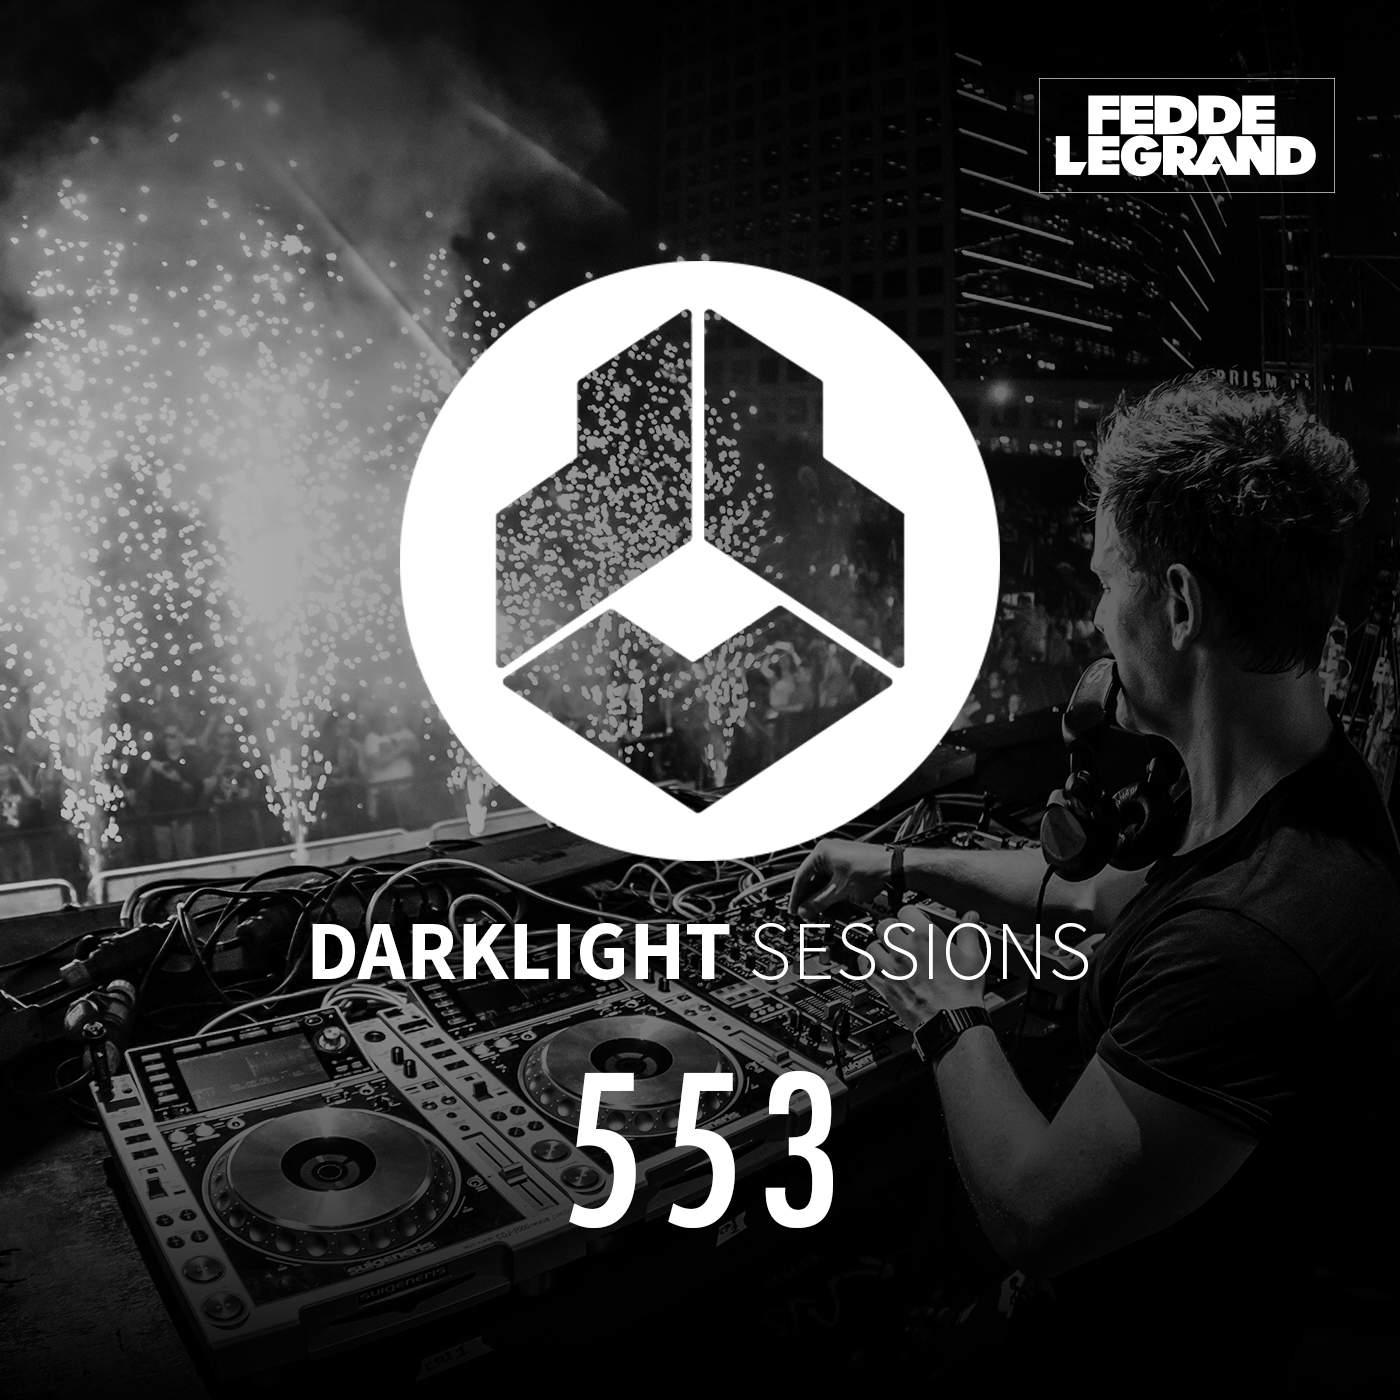 Darklight Sessions 553